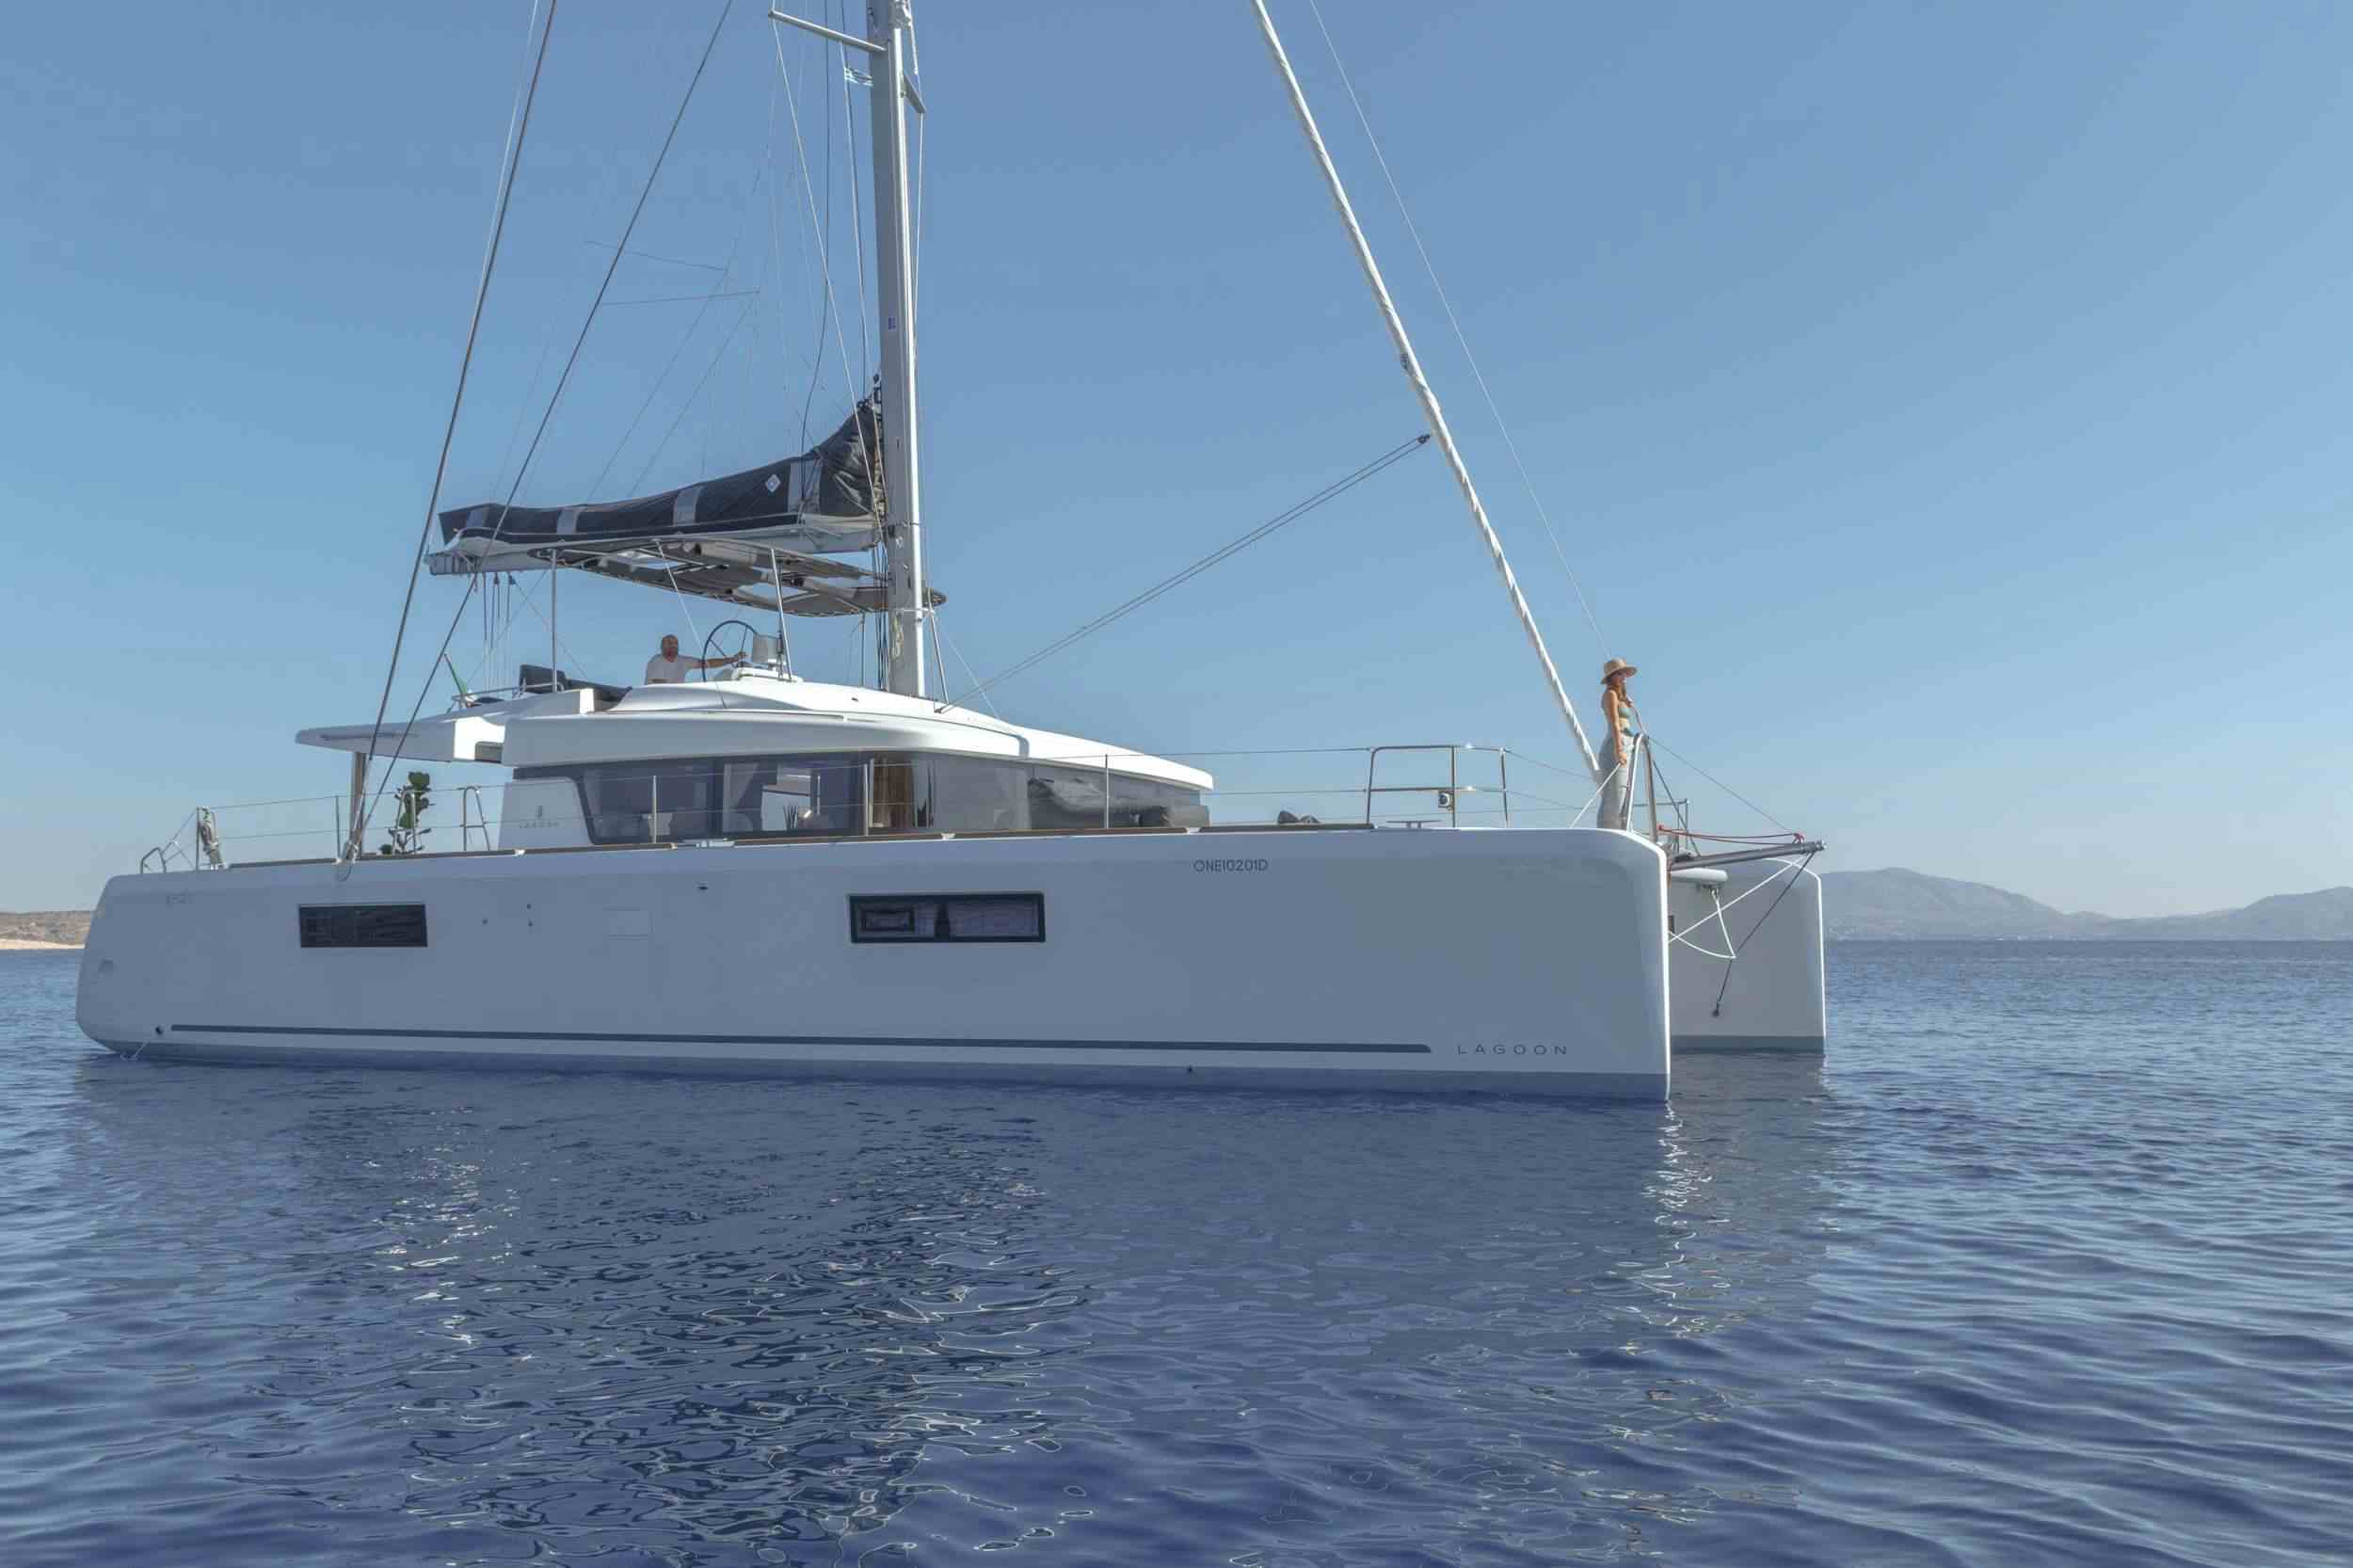 ONEIDA - Yacht Charter Rhodes & Boat hire in Greece 1